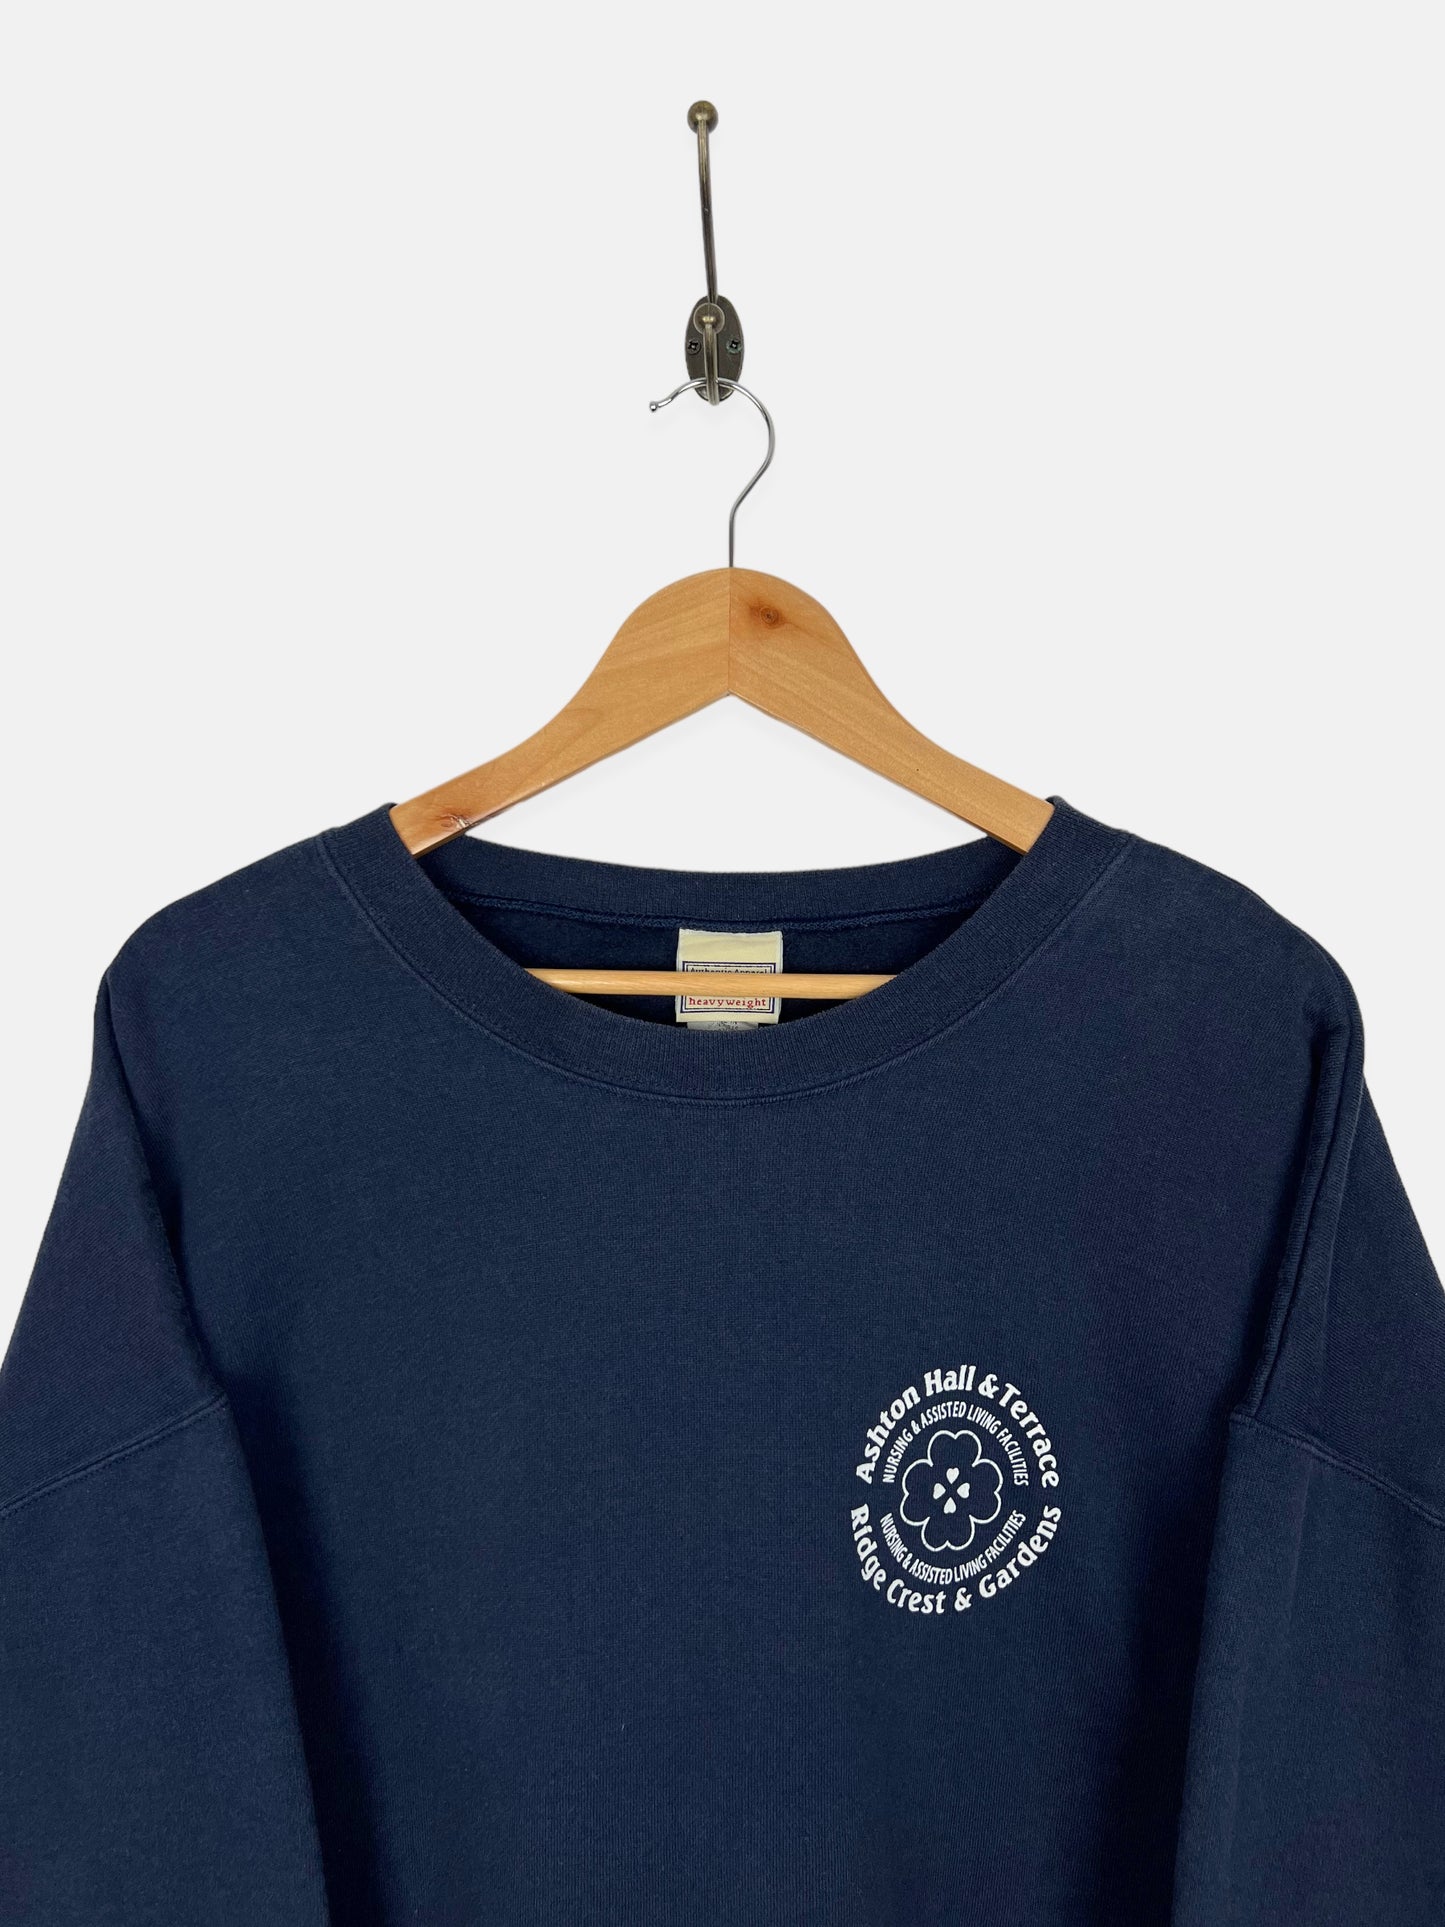 90's Ashton Hall & Terrace Vintage Sweatshirt Size 2XL